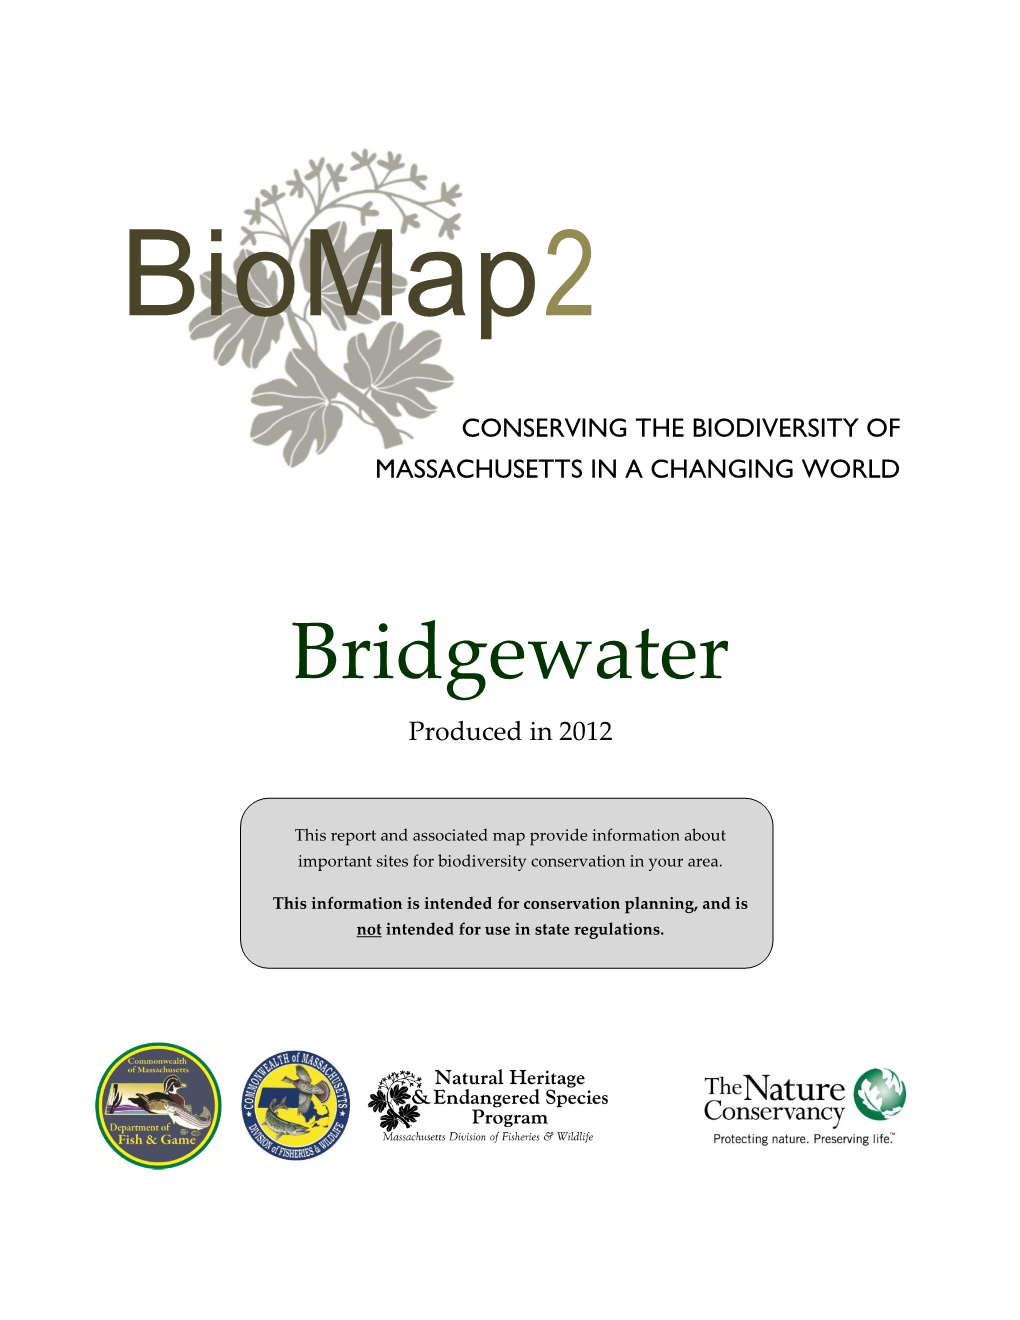 Bridgewater Produced in 2012